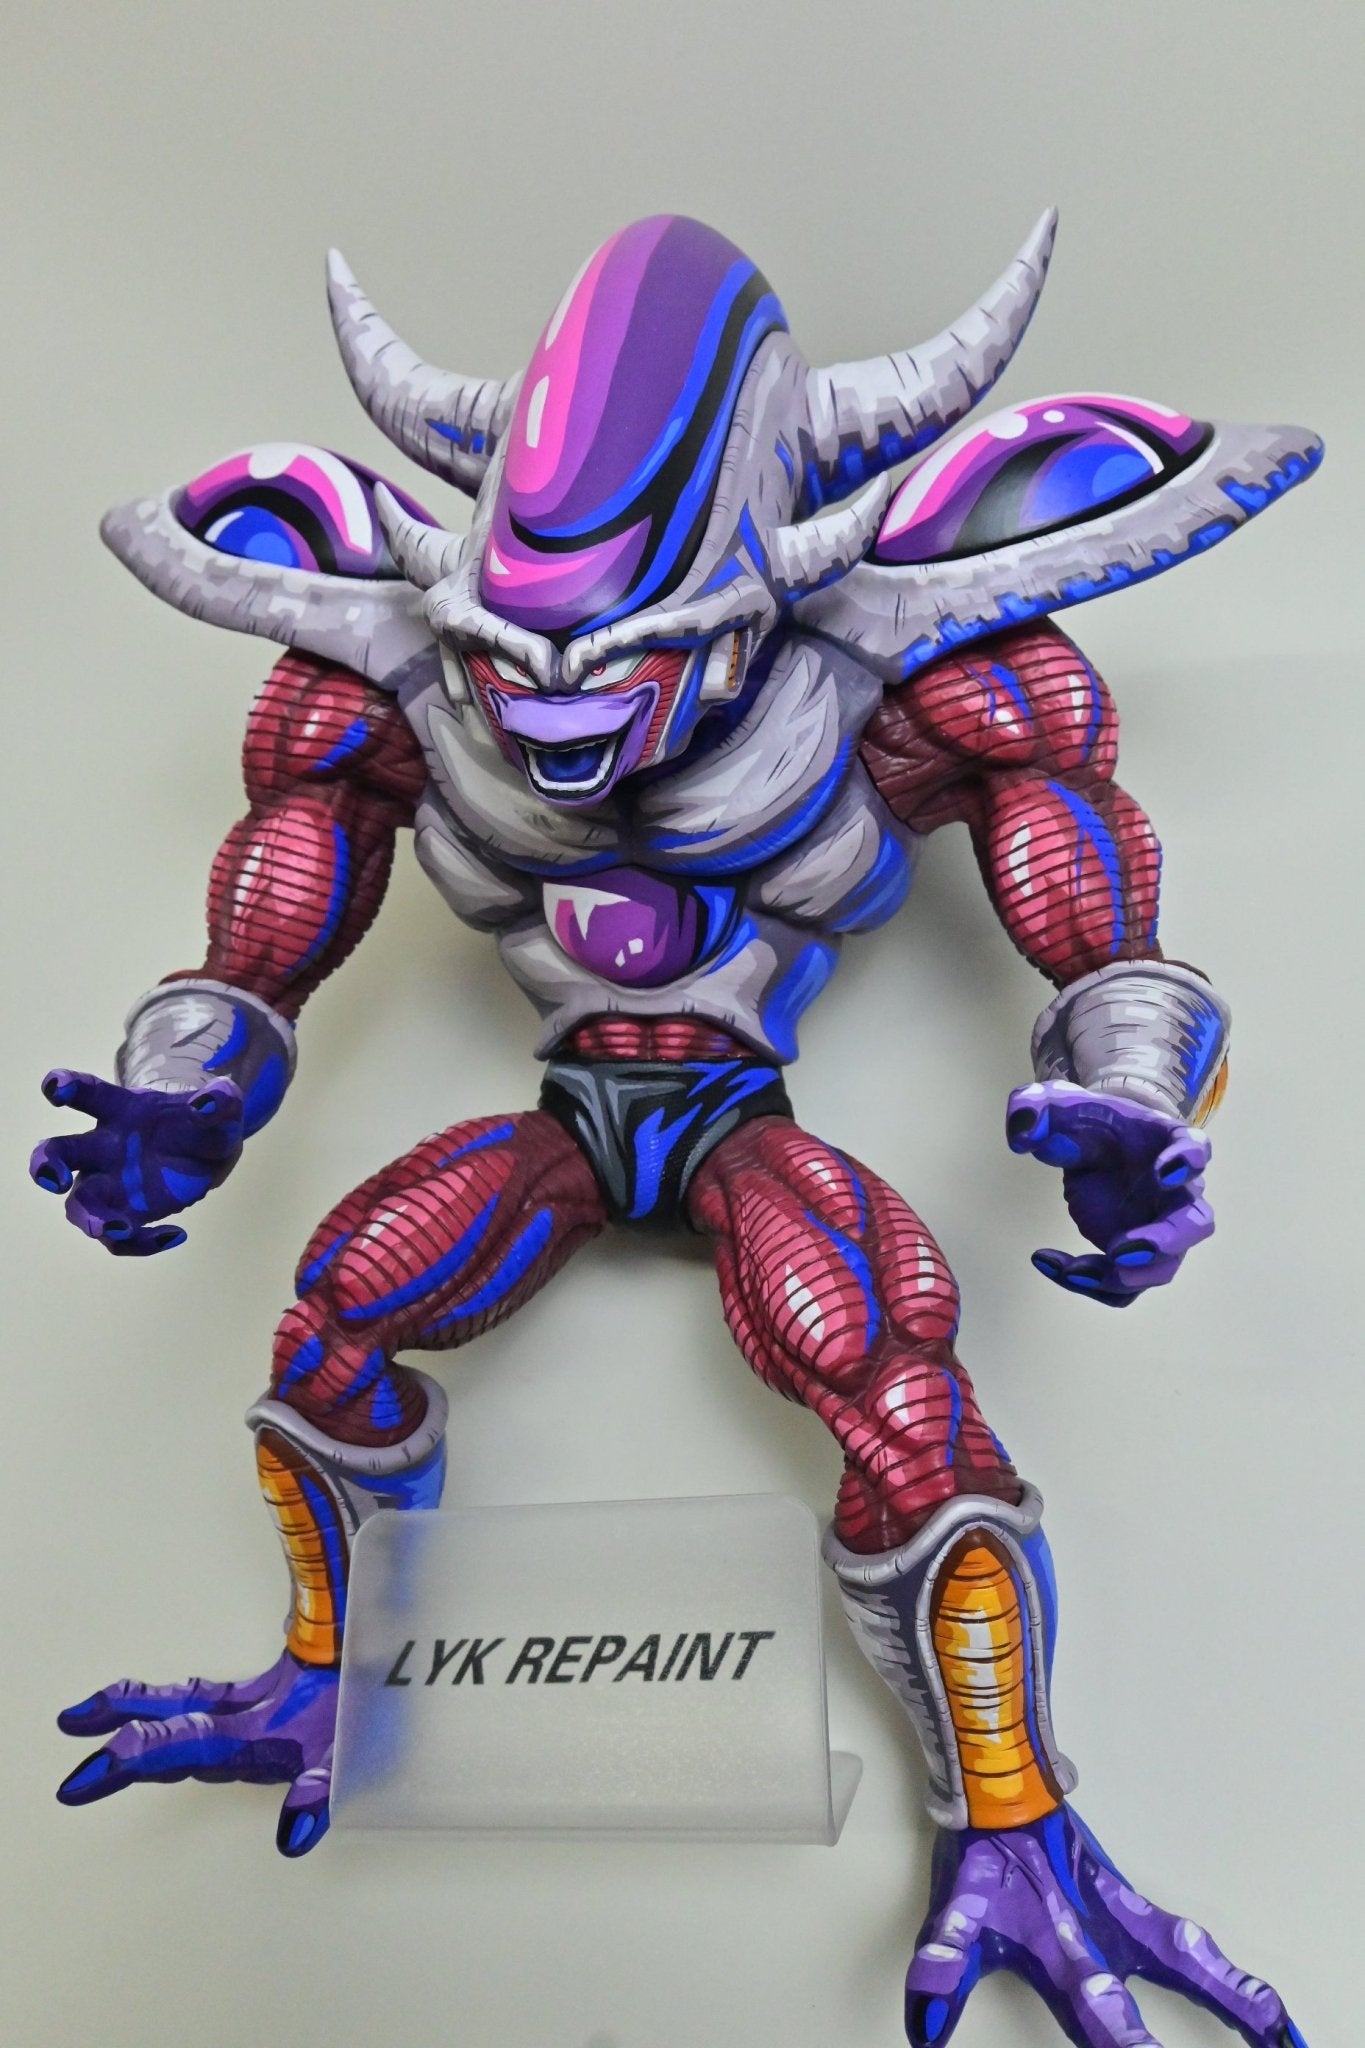 2d comic color Dragon Ball figure repaint-Frieza - Lyk Repaint